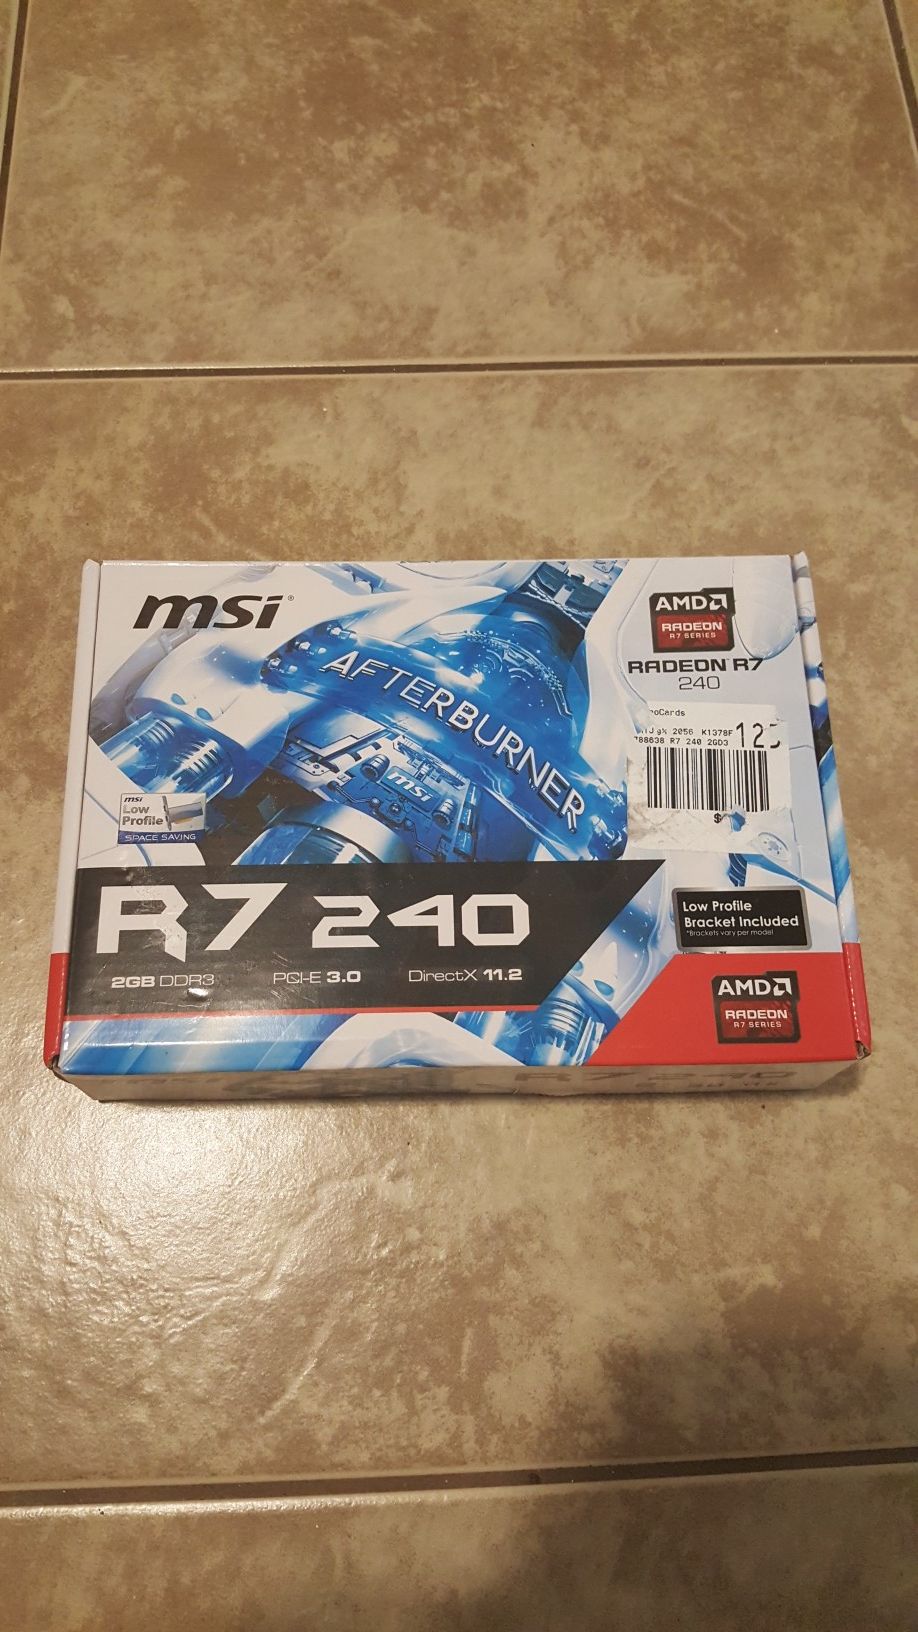 MSI R7 240 2gb graphics card